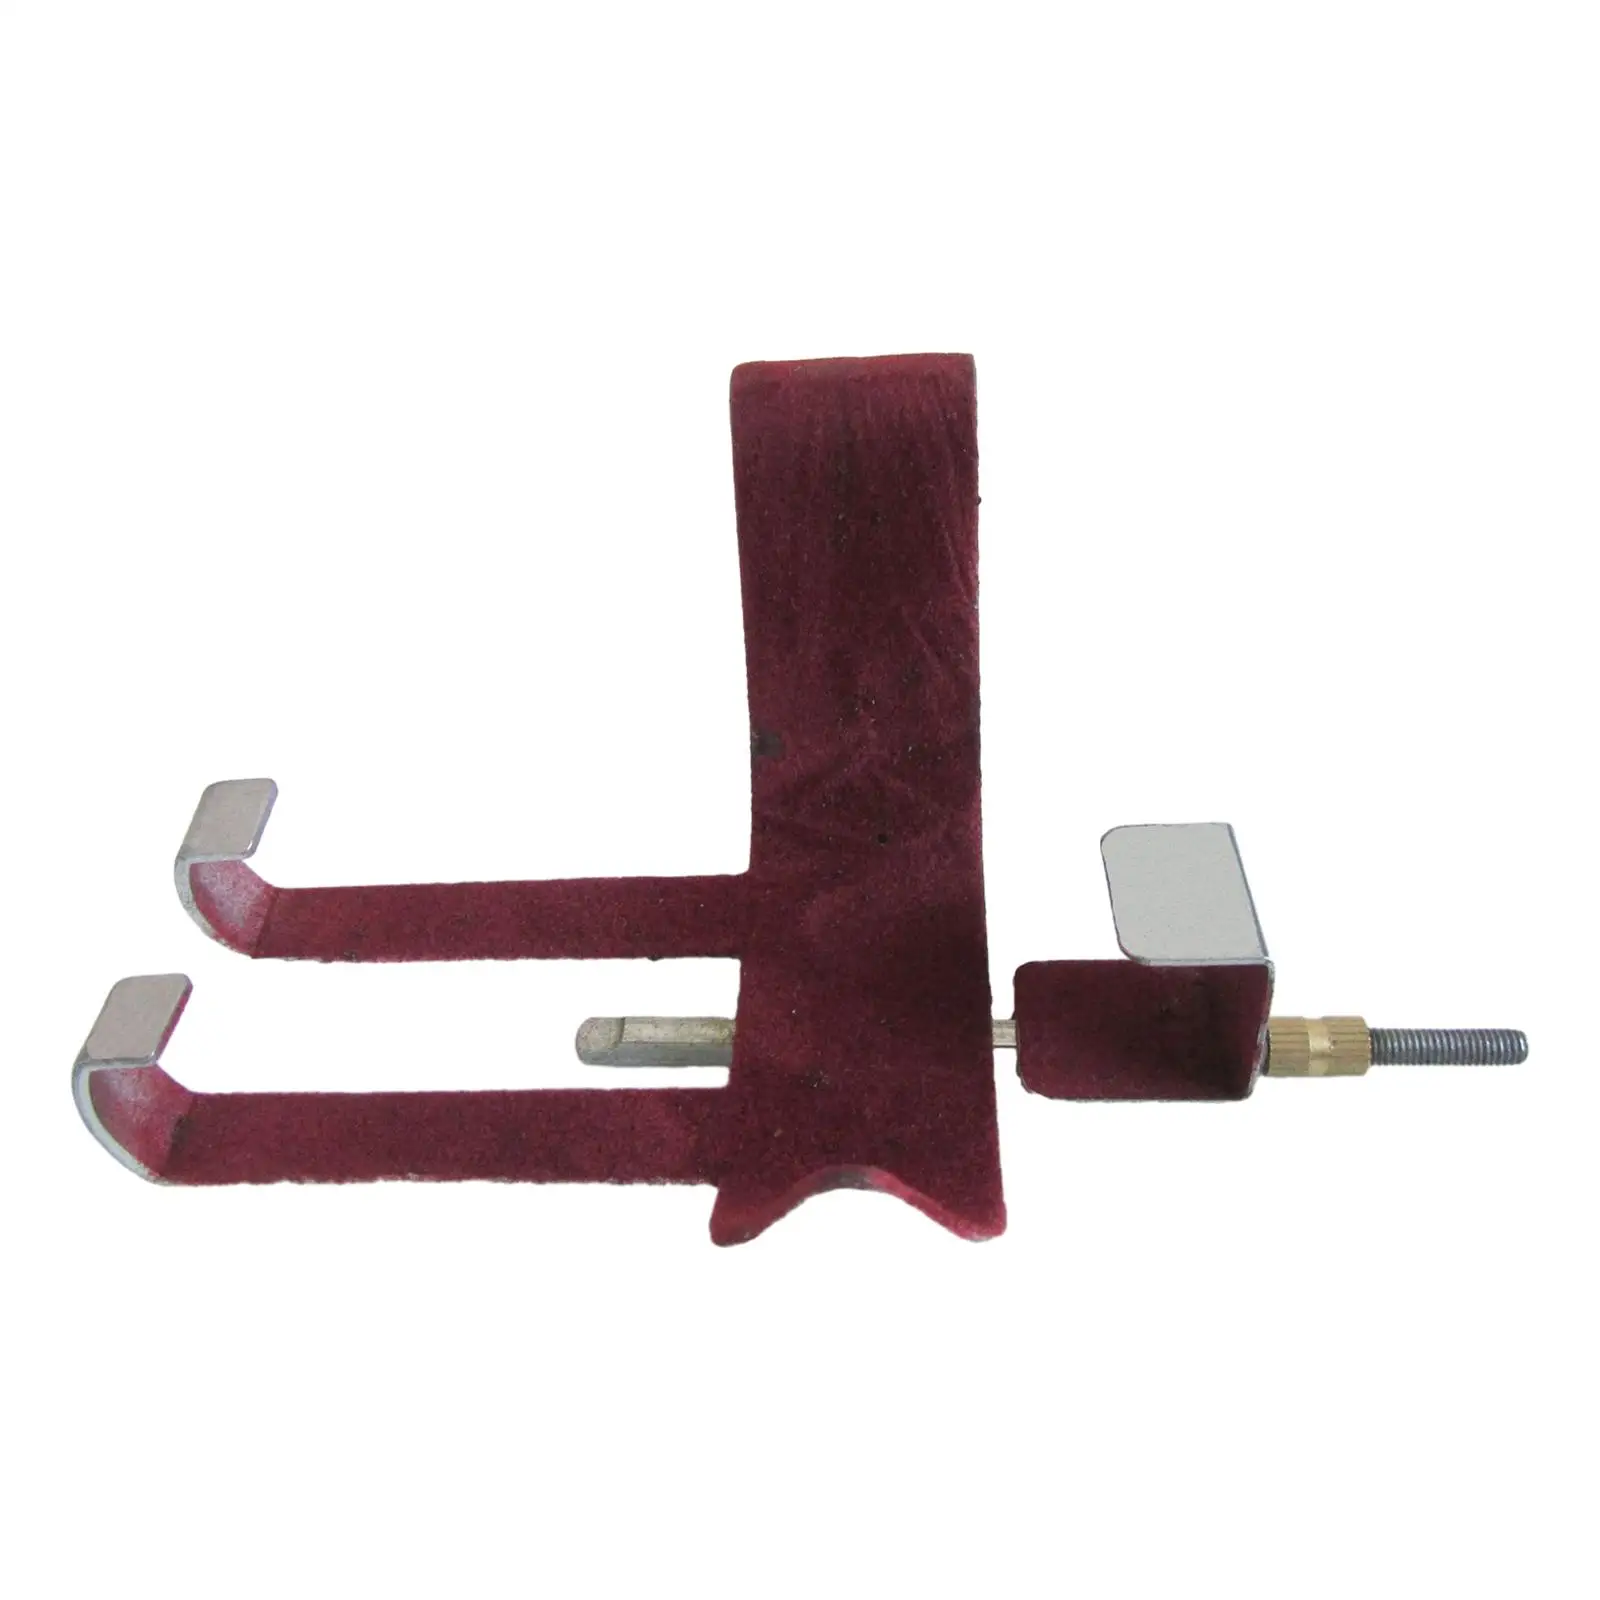 Erhu Waist Rack Comfortable Adjustable Professional Easy to Use Erhu Holder Musical Instrument Frame Accessories for Practice